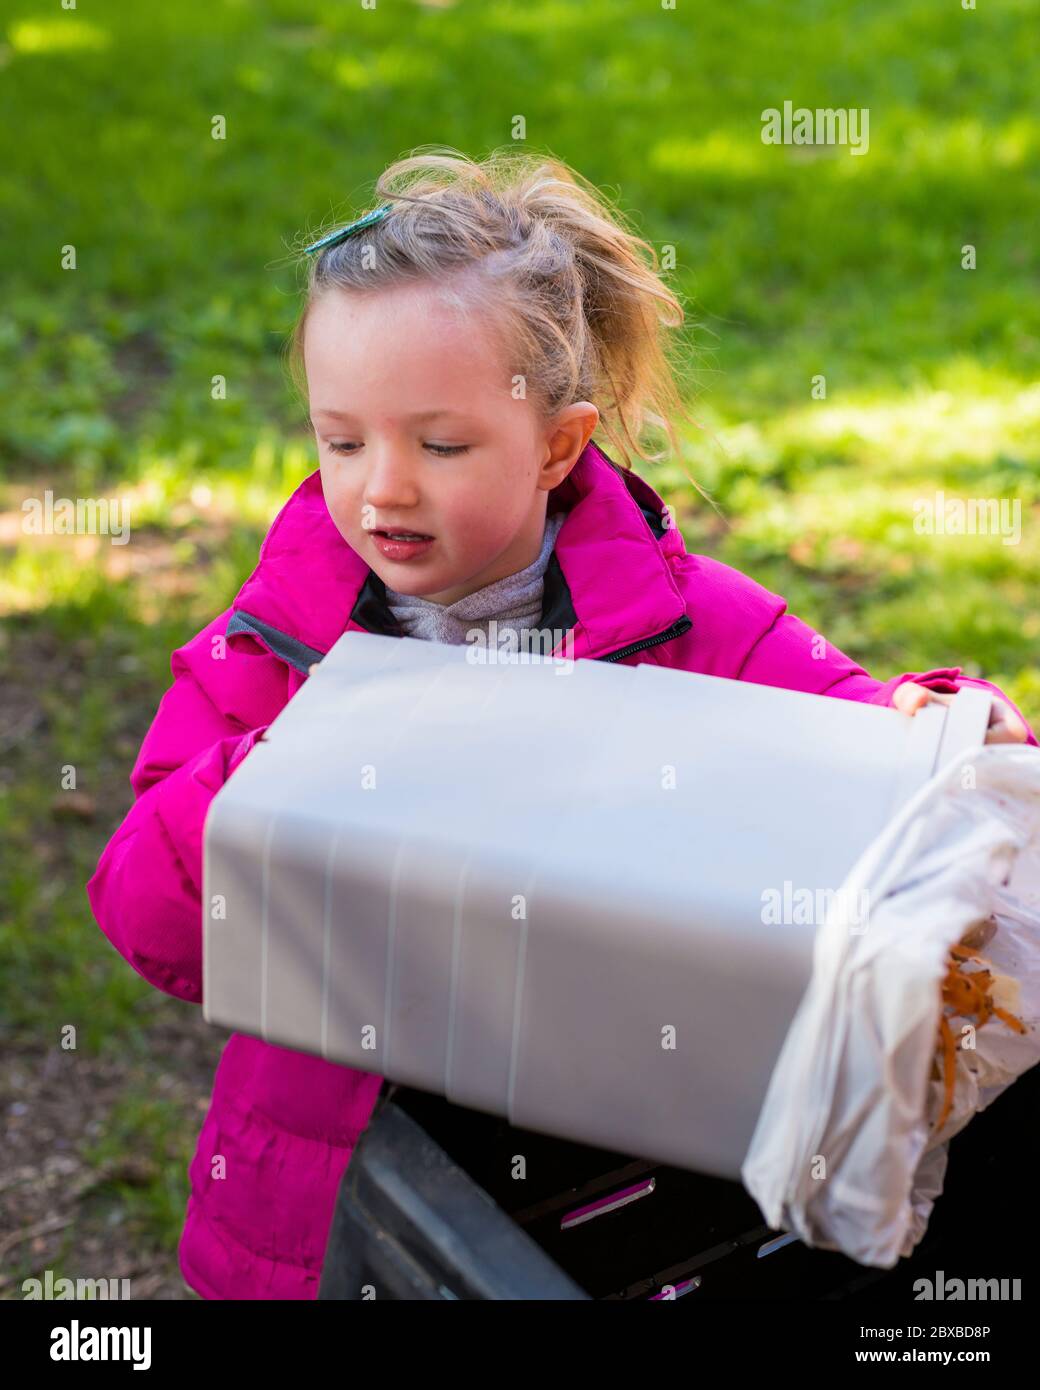 Pre-school girl emptying compost bin during lockdown, Girl wearing pink coat doing composting, Teaching pre-school girl about compost Stock Photo